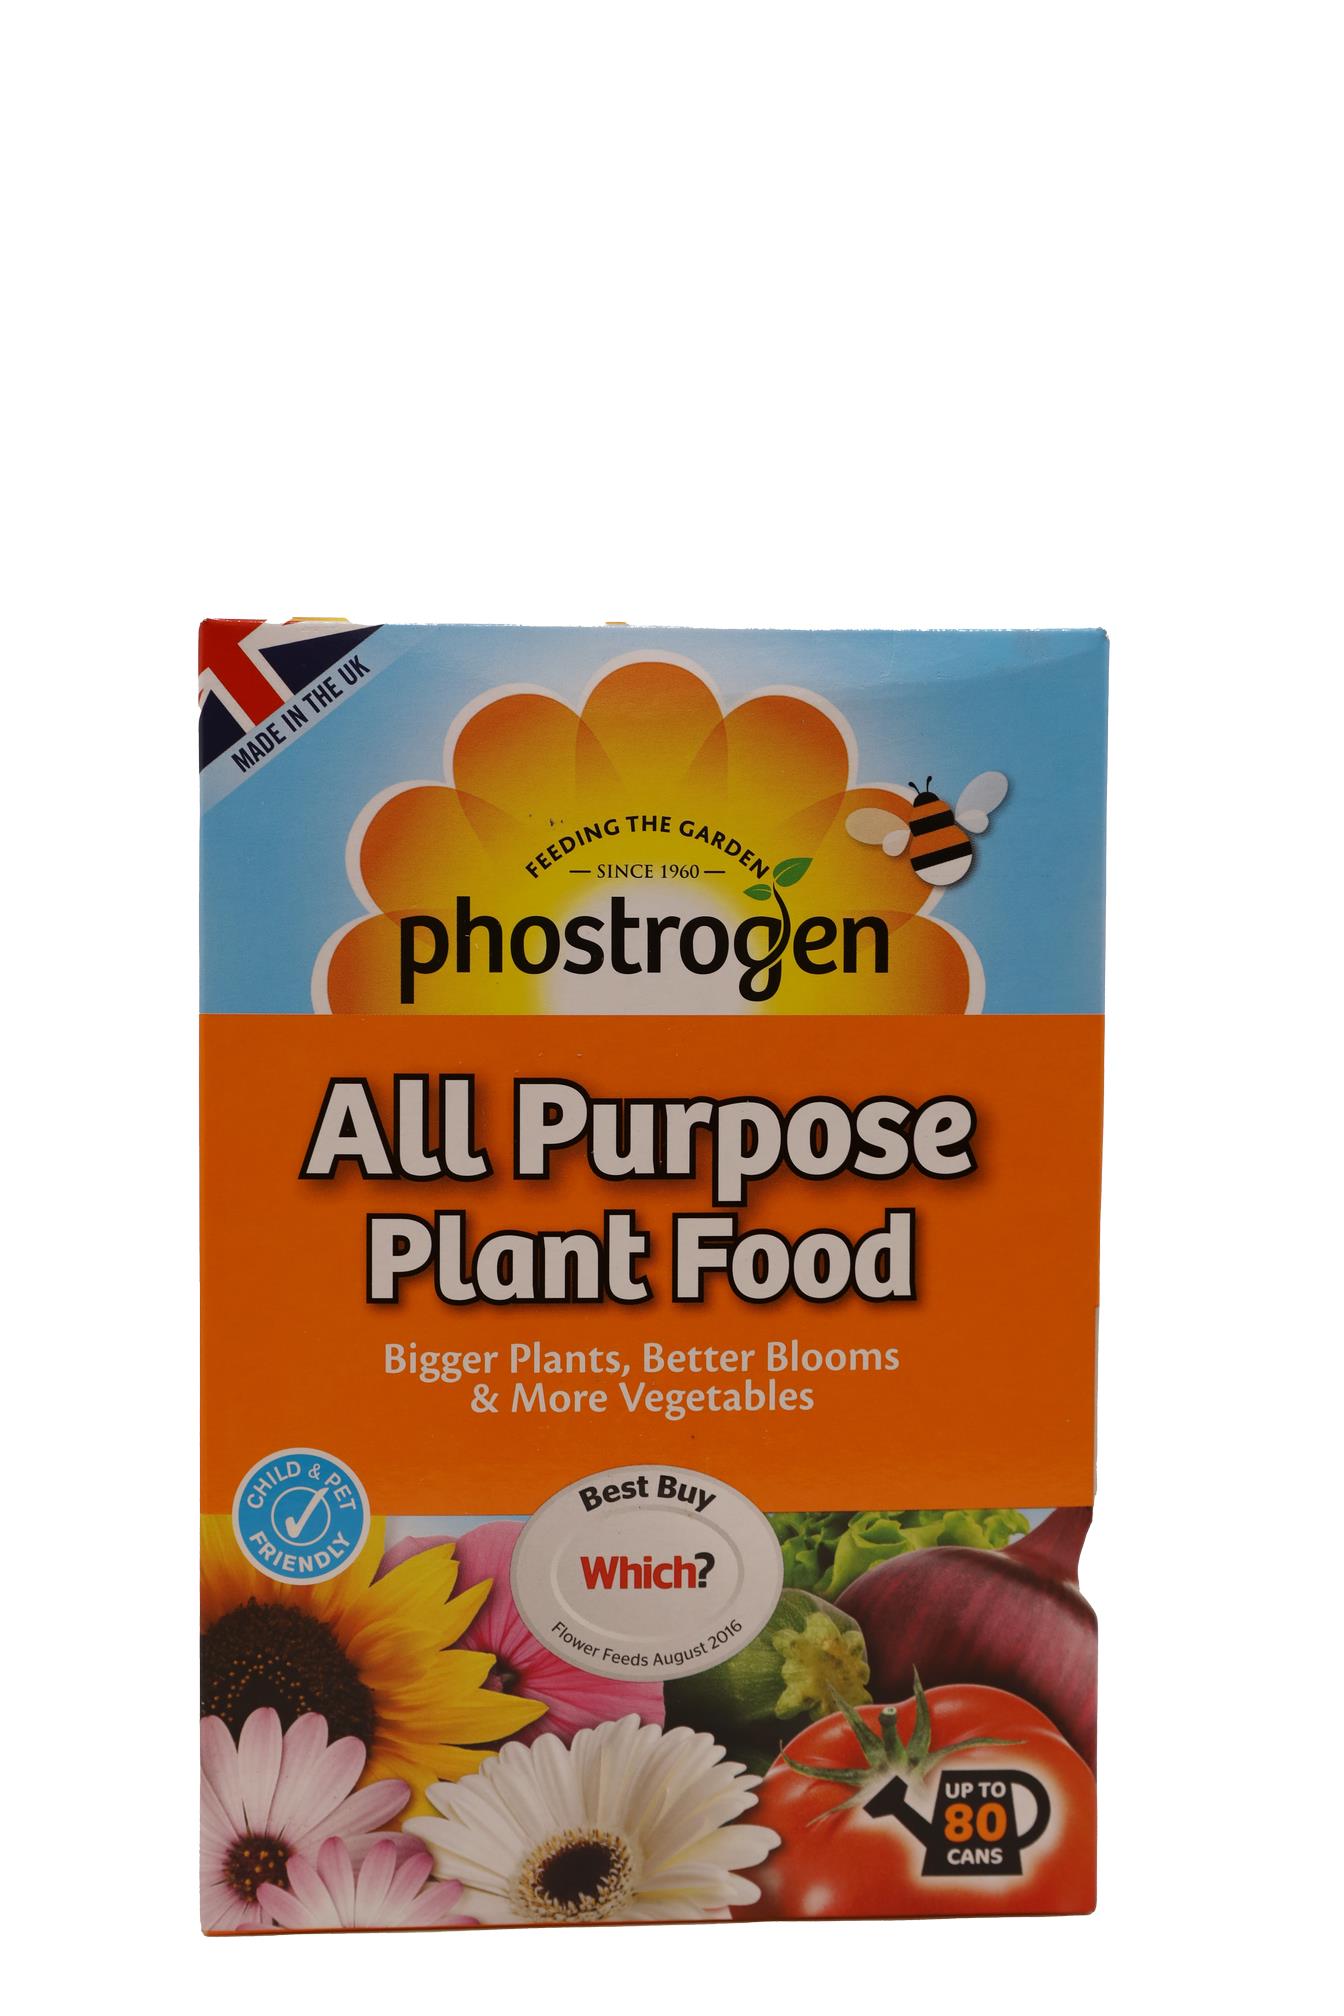 Buy Phostrogen - All Purpose Plant Food (800g)-Packet Online | Agriculture Fertilizers | Qetaat.com